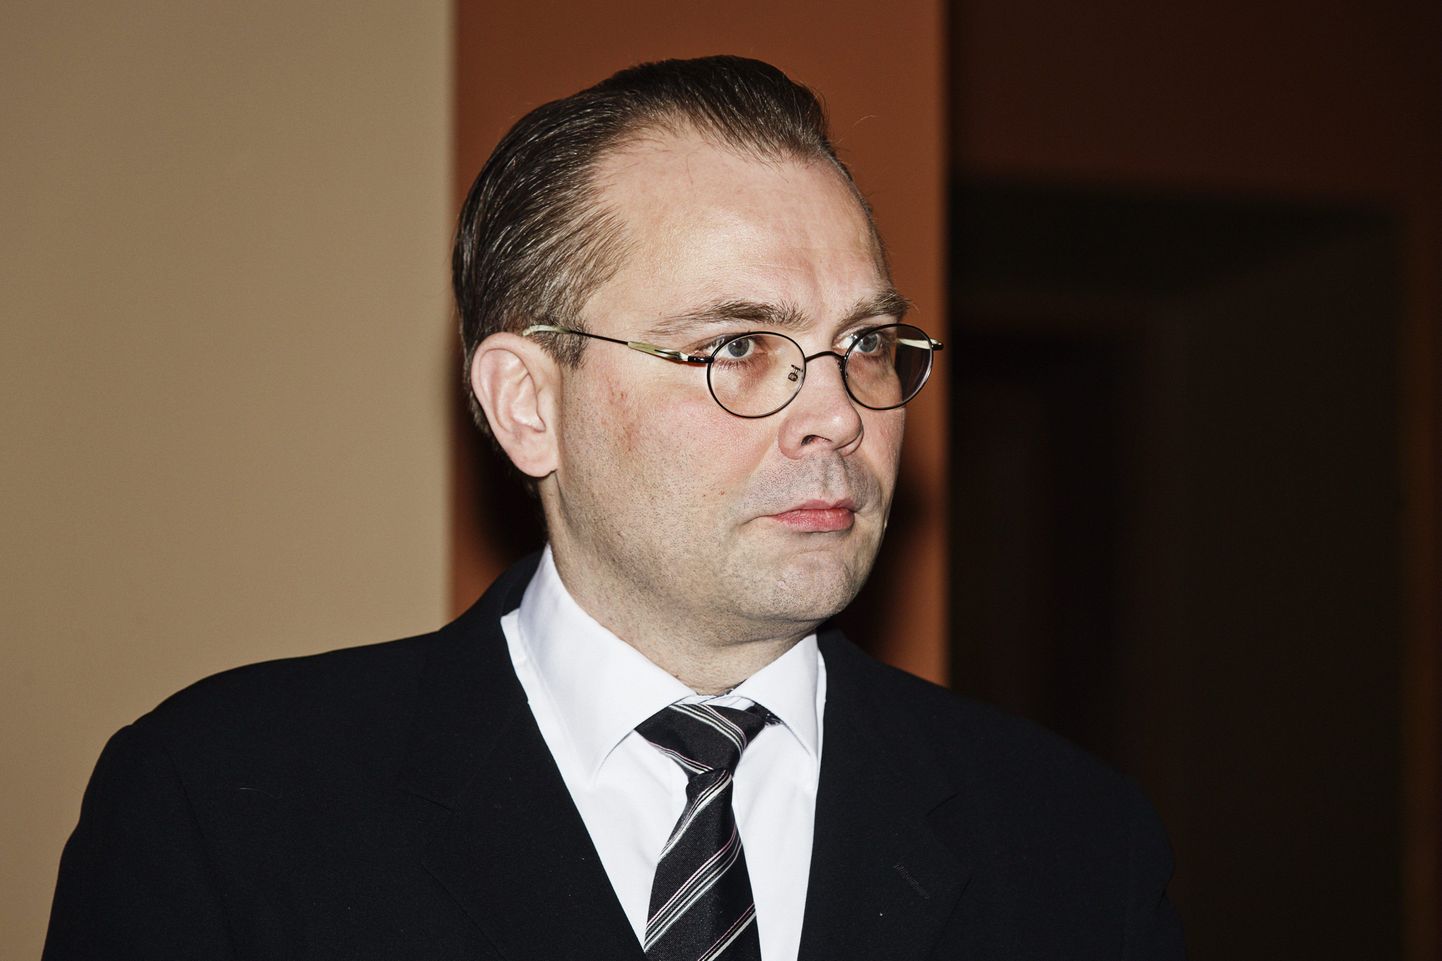 Soome kaitseminister Jussi Niinistö